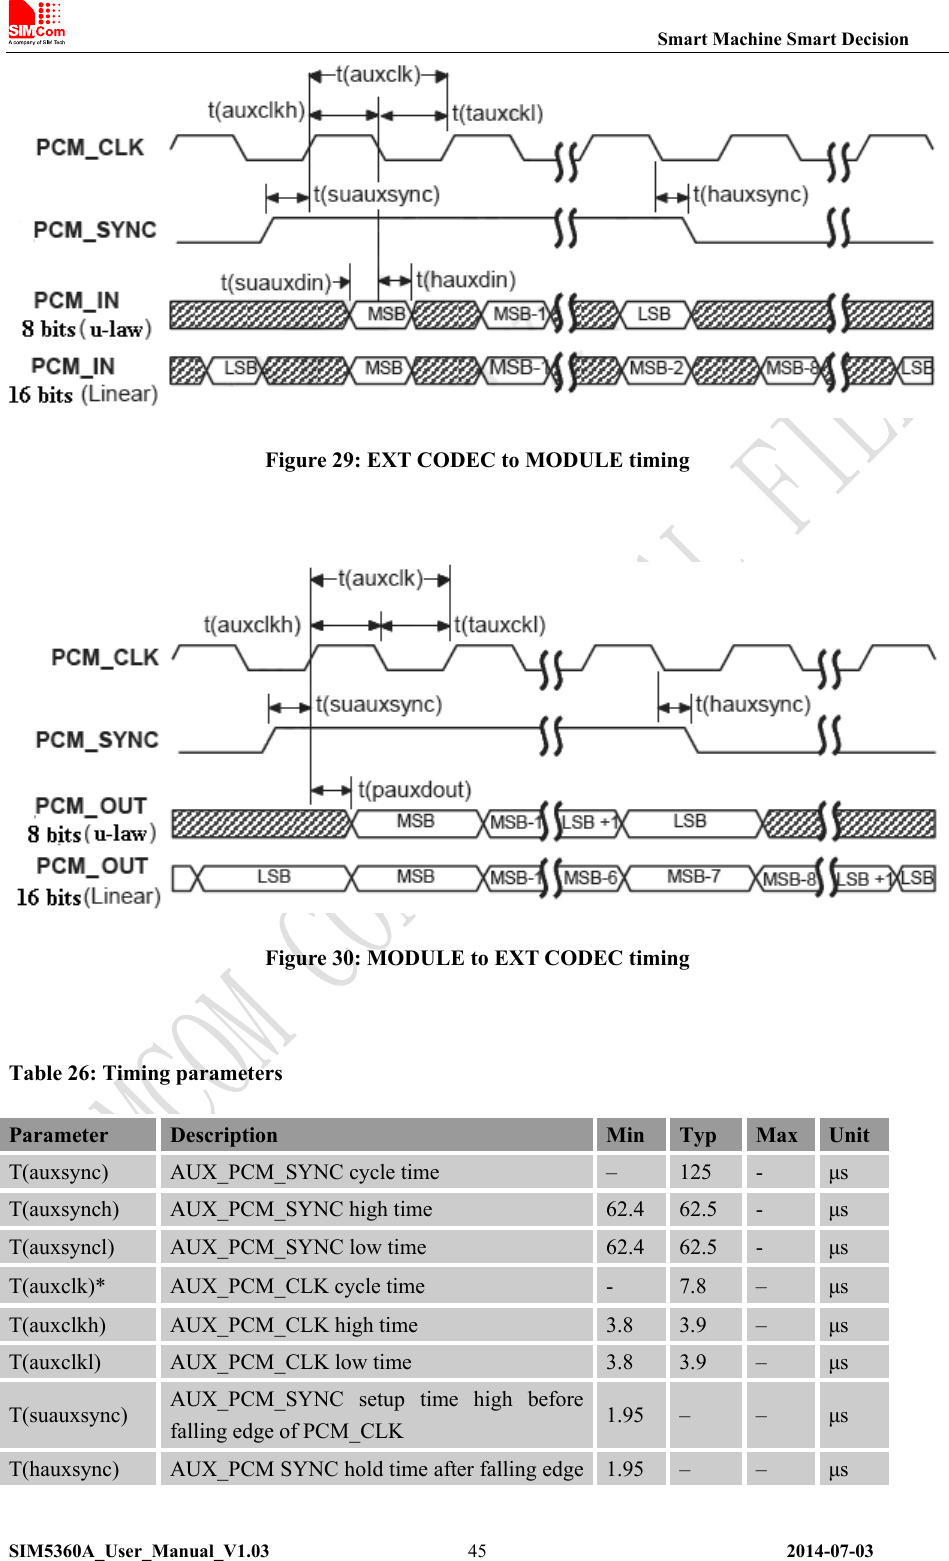                                                                Smart Machine Smart Decision SIM5360A_User_Manual_V1.03                 2014-07-03 45 Figure 29: EXT CODEC to MODULE timing   Figure 30: MODULE to EXT CODEC timing  Table 26: Timing parameters Parameter Description Min Typ Max Unit T(auxsync)  AUX_PCM_SYNC cycle time    –  125  -  μs T(auxsynch)  AUX_PCM_SYNC high time    62.4  62.5  -  μs T(auxsyncl)  AUX_PCM_SYNC low time    62.4  62.5  -  μs T(auxclk)*  AUX_PCM_CLK cycle time    -  7.8  –  μs T(auxclkh)  AUX_PCM_CLK high time  3.8  3.9  –  μs T(auxclkl)  AUX_PCM_CLK low time    3.8  3.9  –  μs T(suauxsync)  AUX_PCM_SYNC  setup  time  high  before falling edge of PCM_CLK  1.95  –  –  μs T(hauxsync)  AUX_PCM SYNC hold time after falling edge  1.95  –  –  μs 